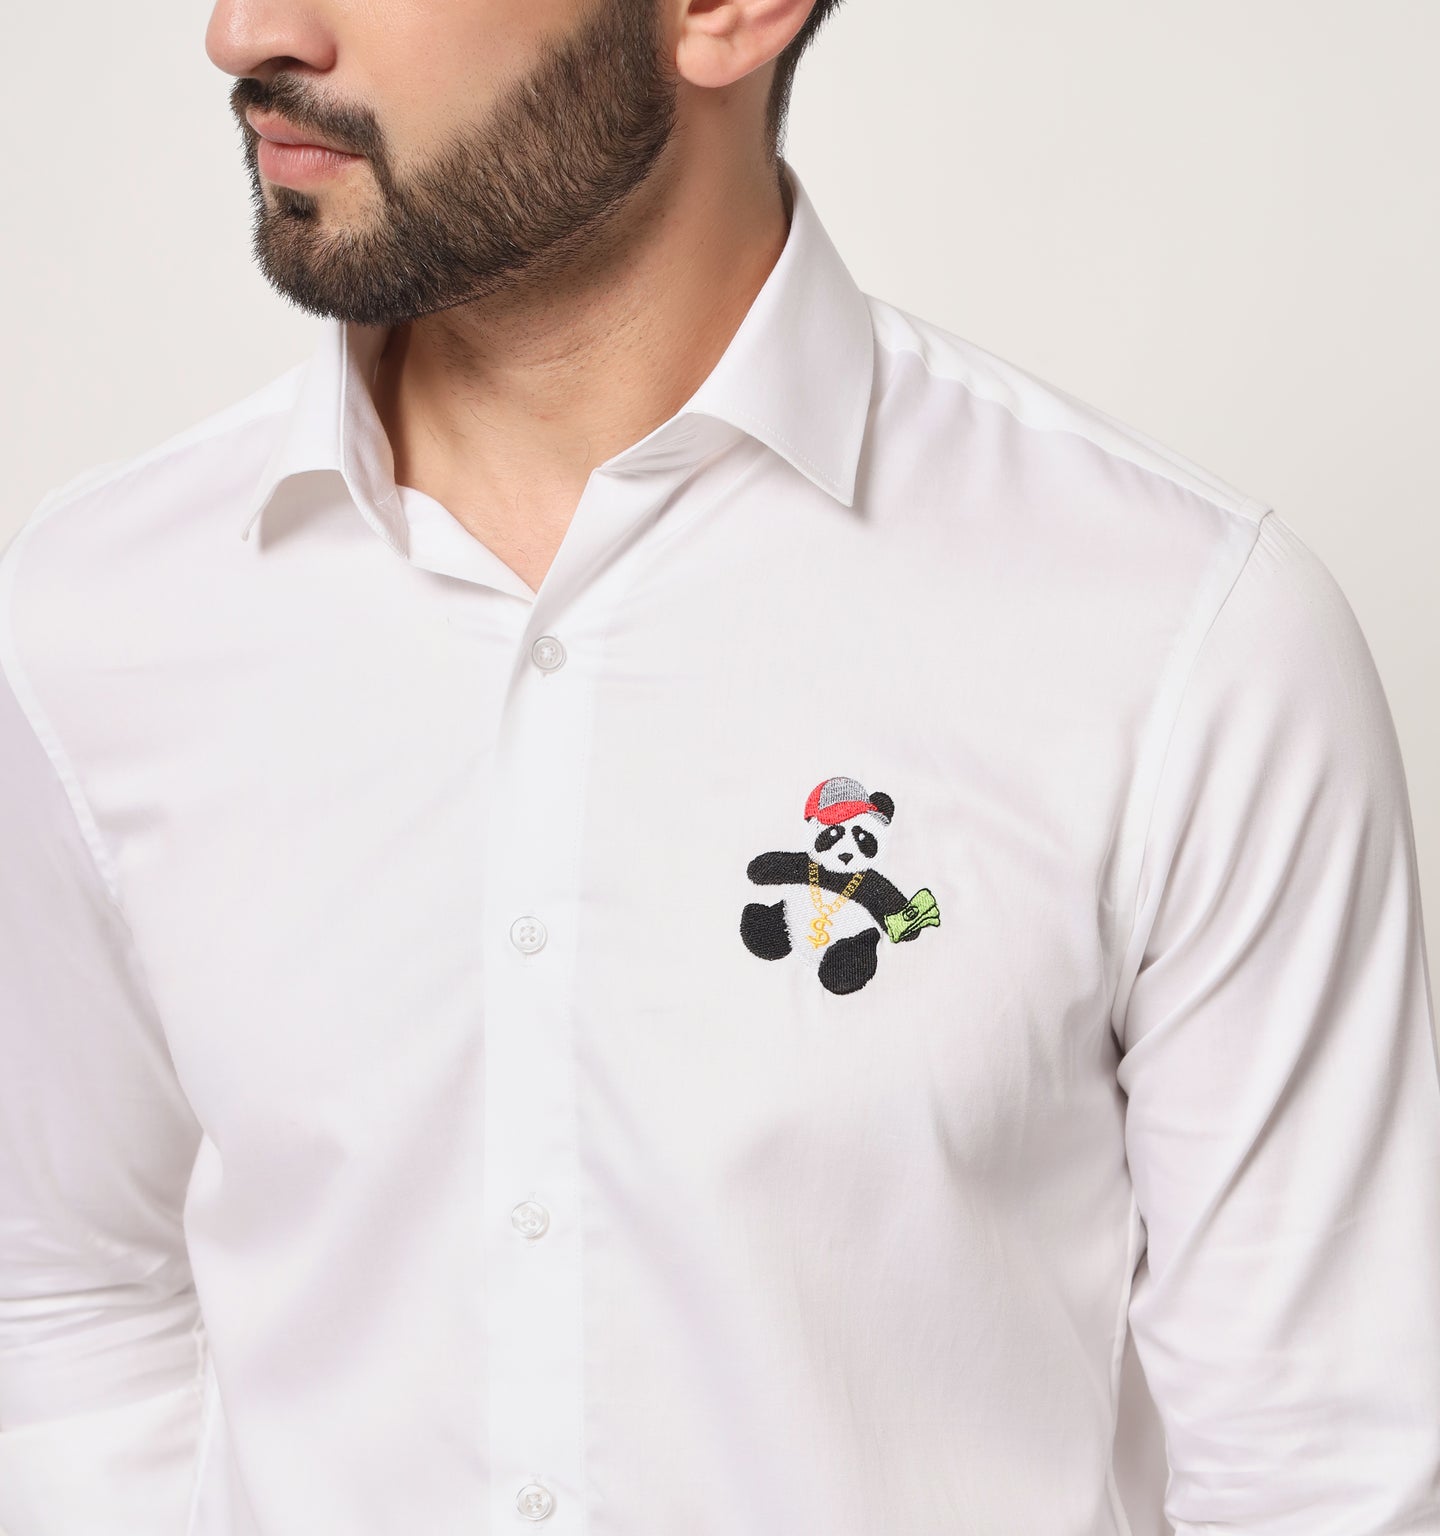 Baller Panda Embroidery Shirt